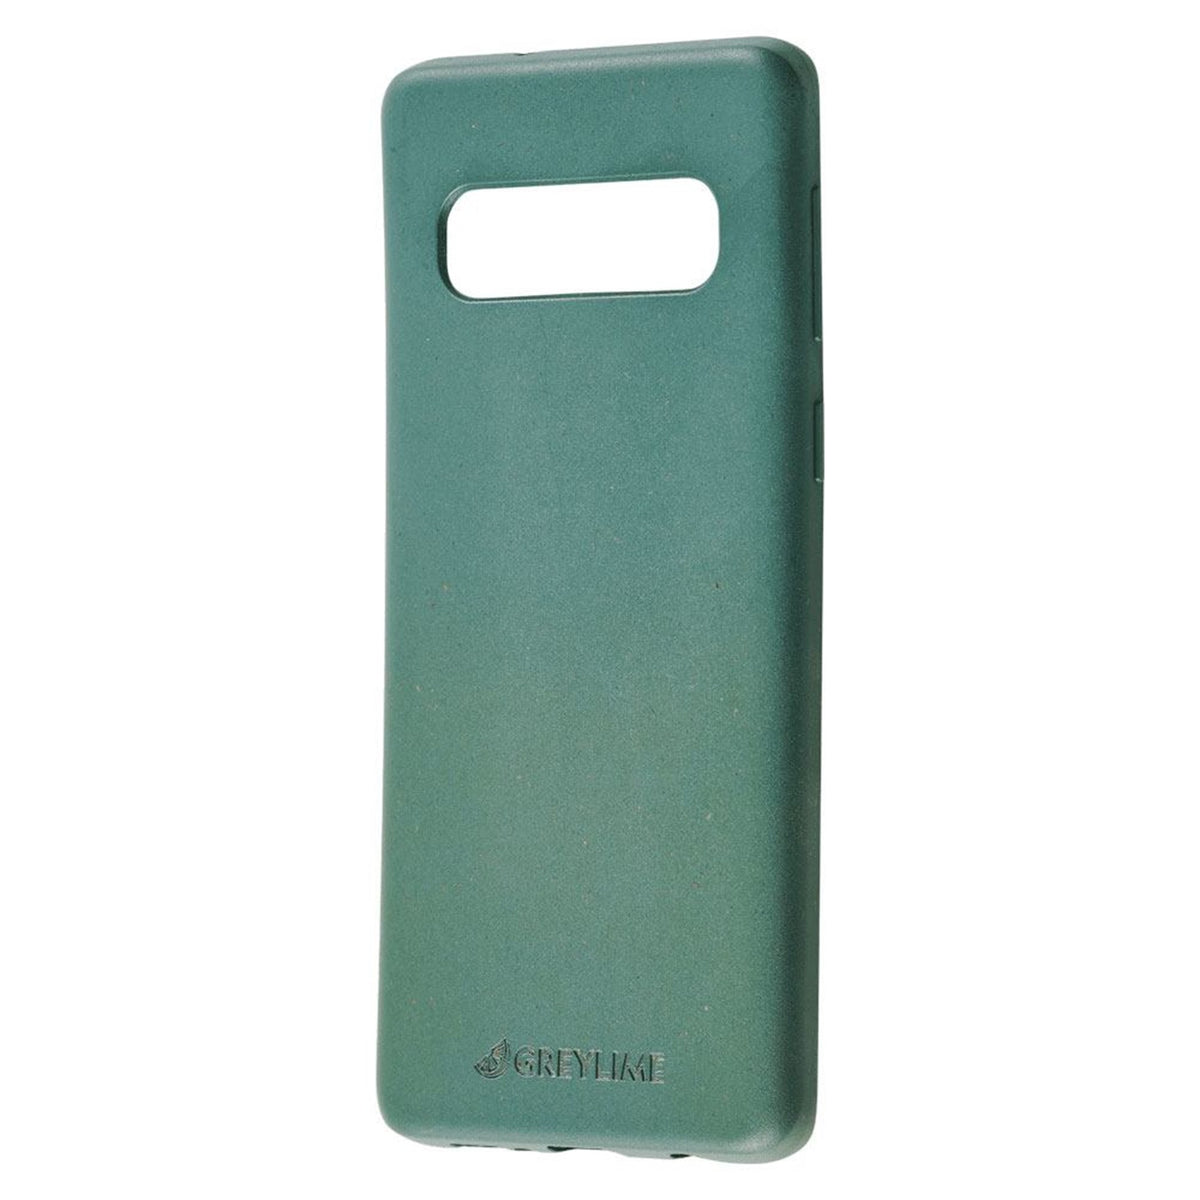 GreyLime-Samsung-Galaxy-S10-Plus-biodegradable-cover-Dark-green-COSAM10P04-V2.jpg